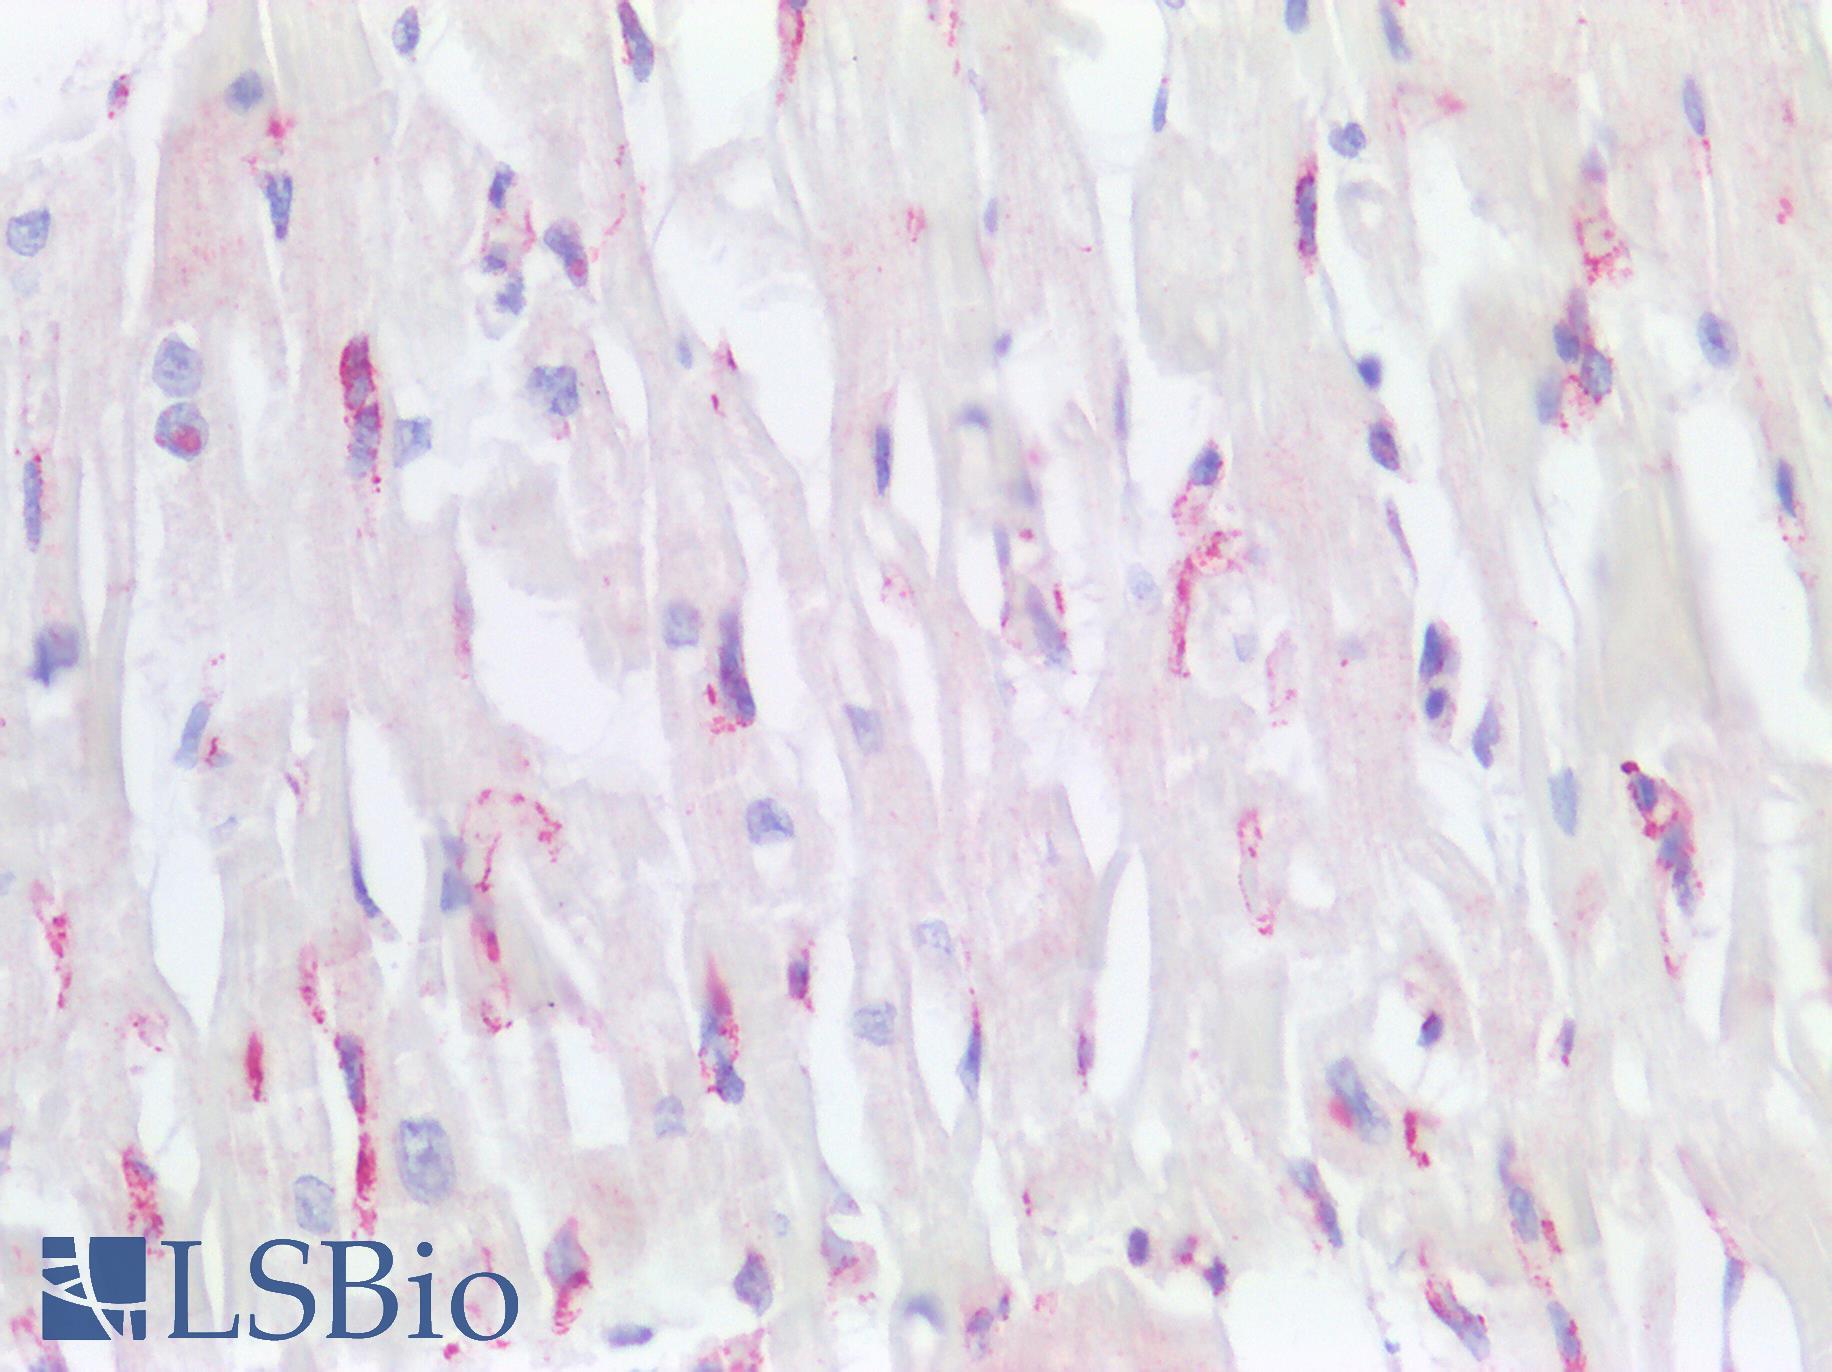 NES / Nestin Antibody - Human Heart: Formalin-Fixed, Paraffin-Embedded (FFPE)